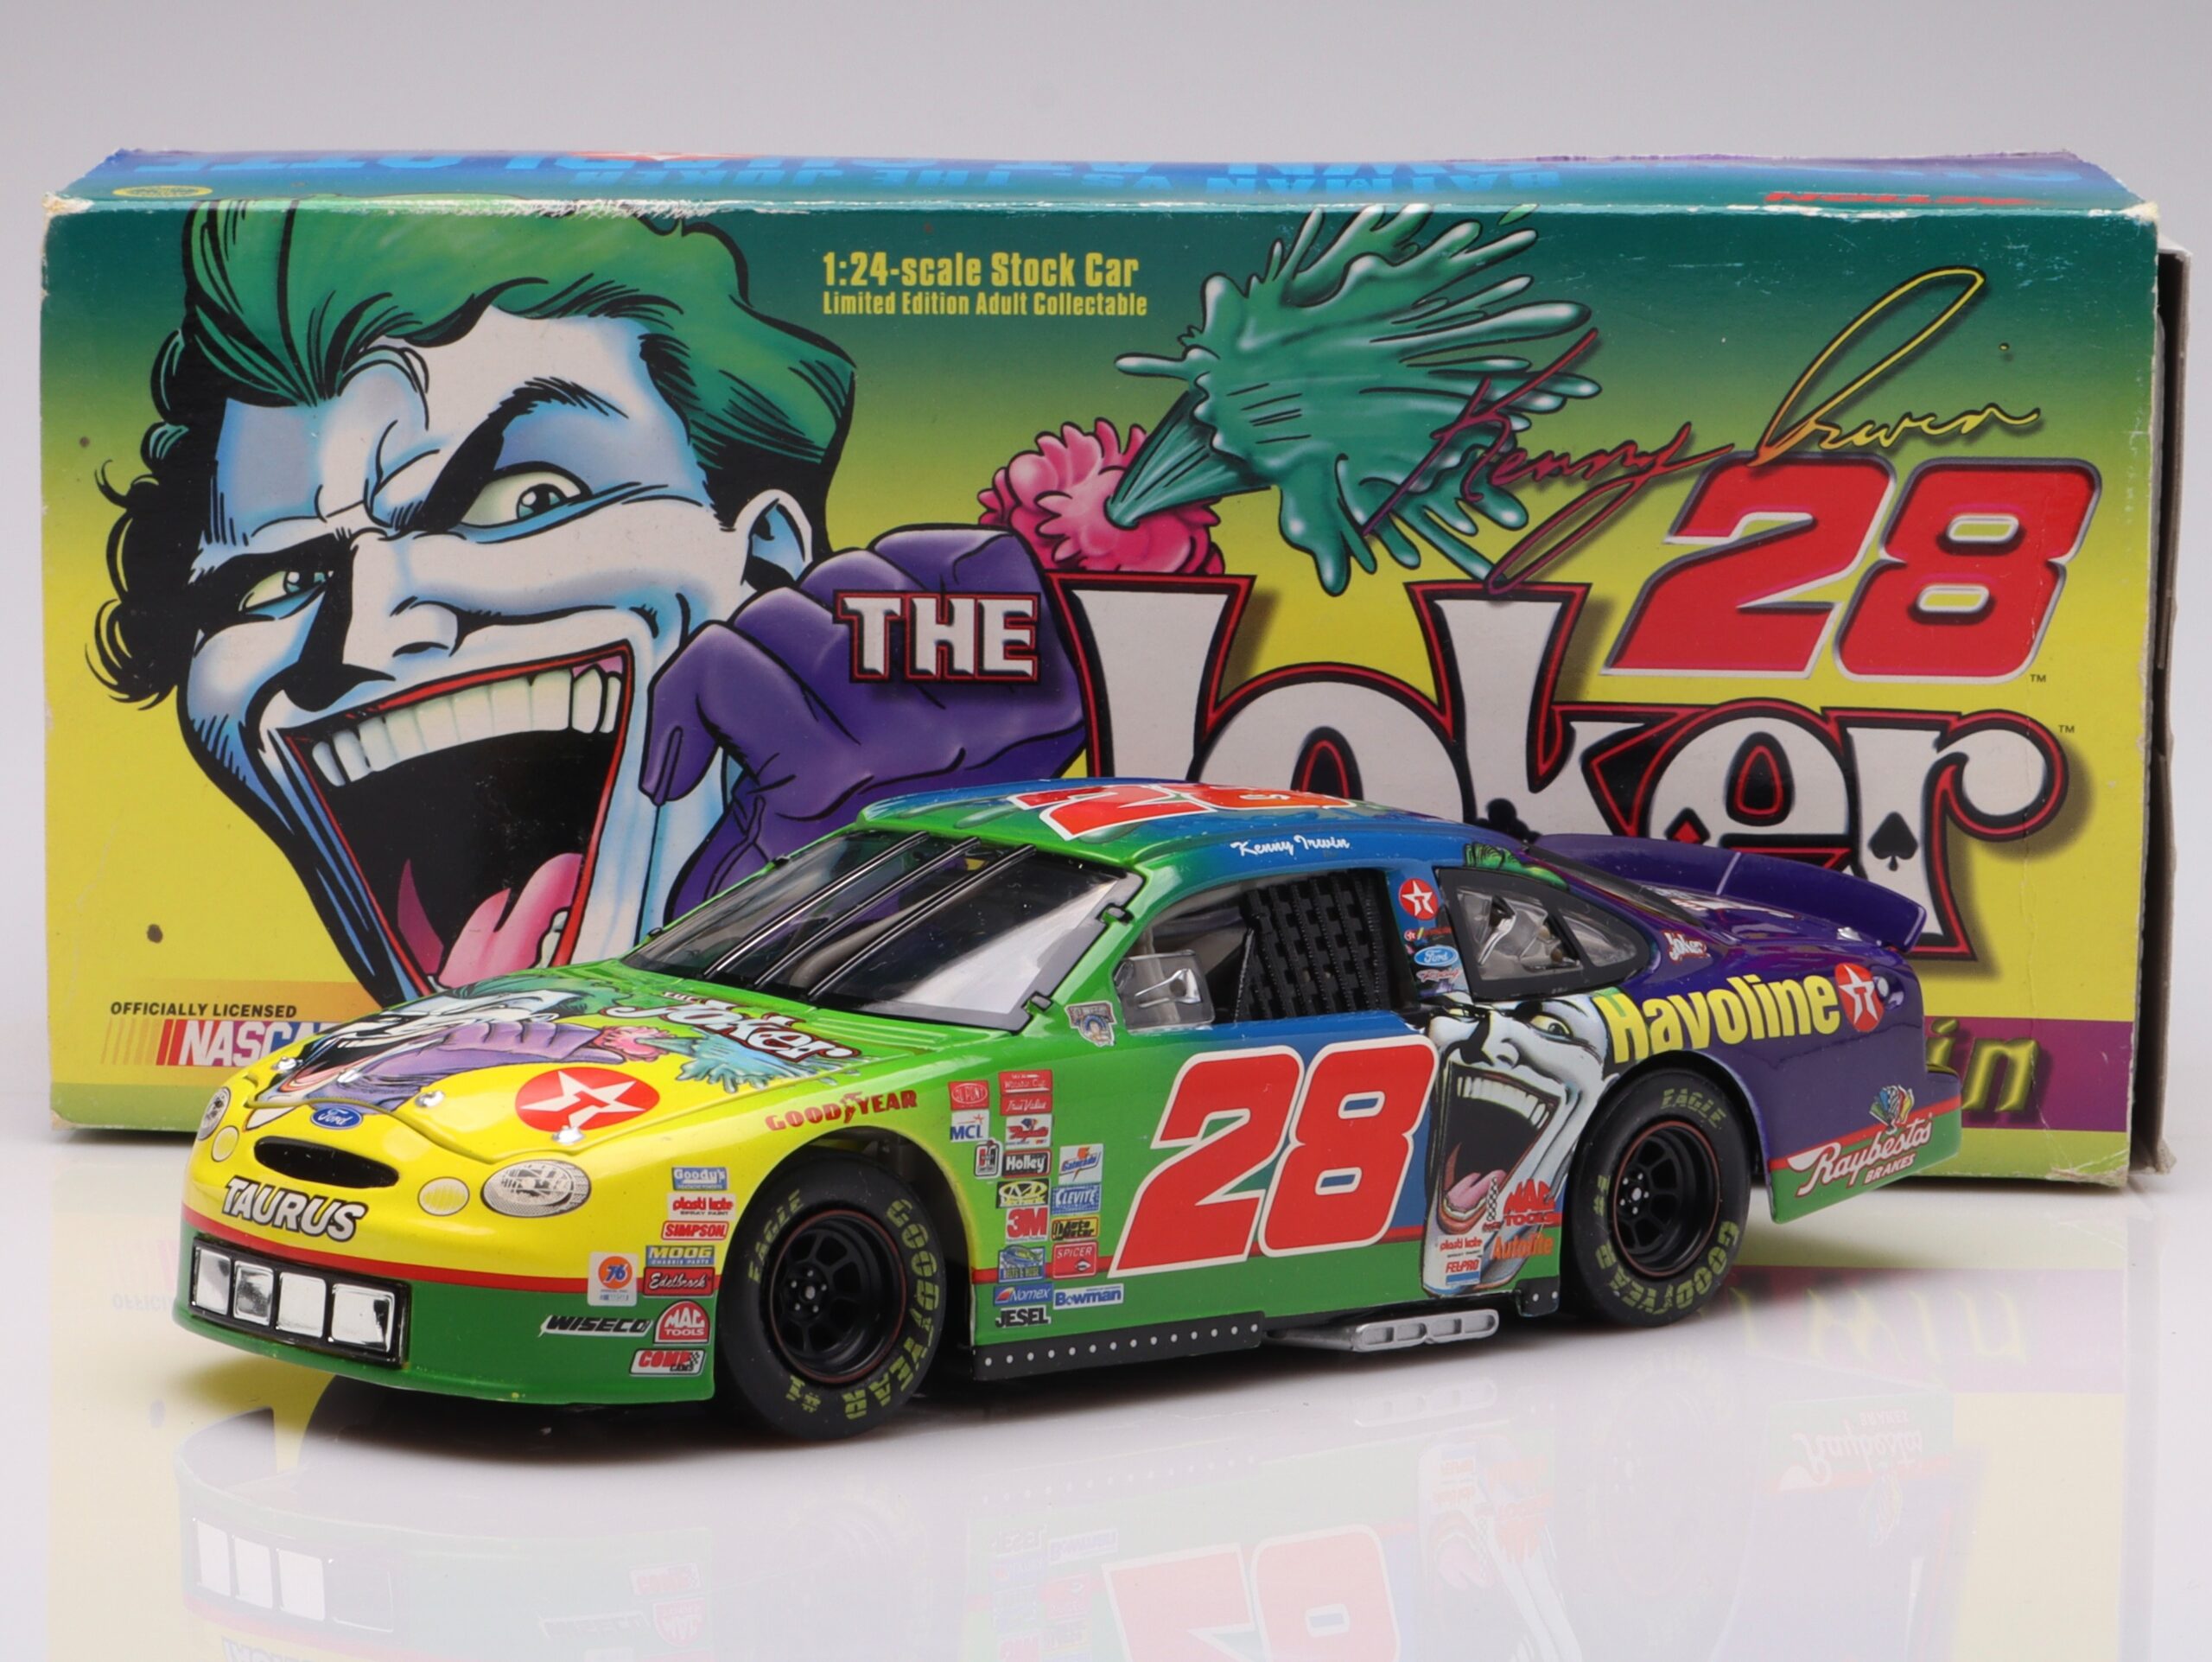 Ford Taurus, Kenny Irwin #28 The Joker Texaco - 1998 NASCAR Action 1:24